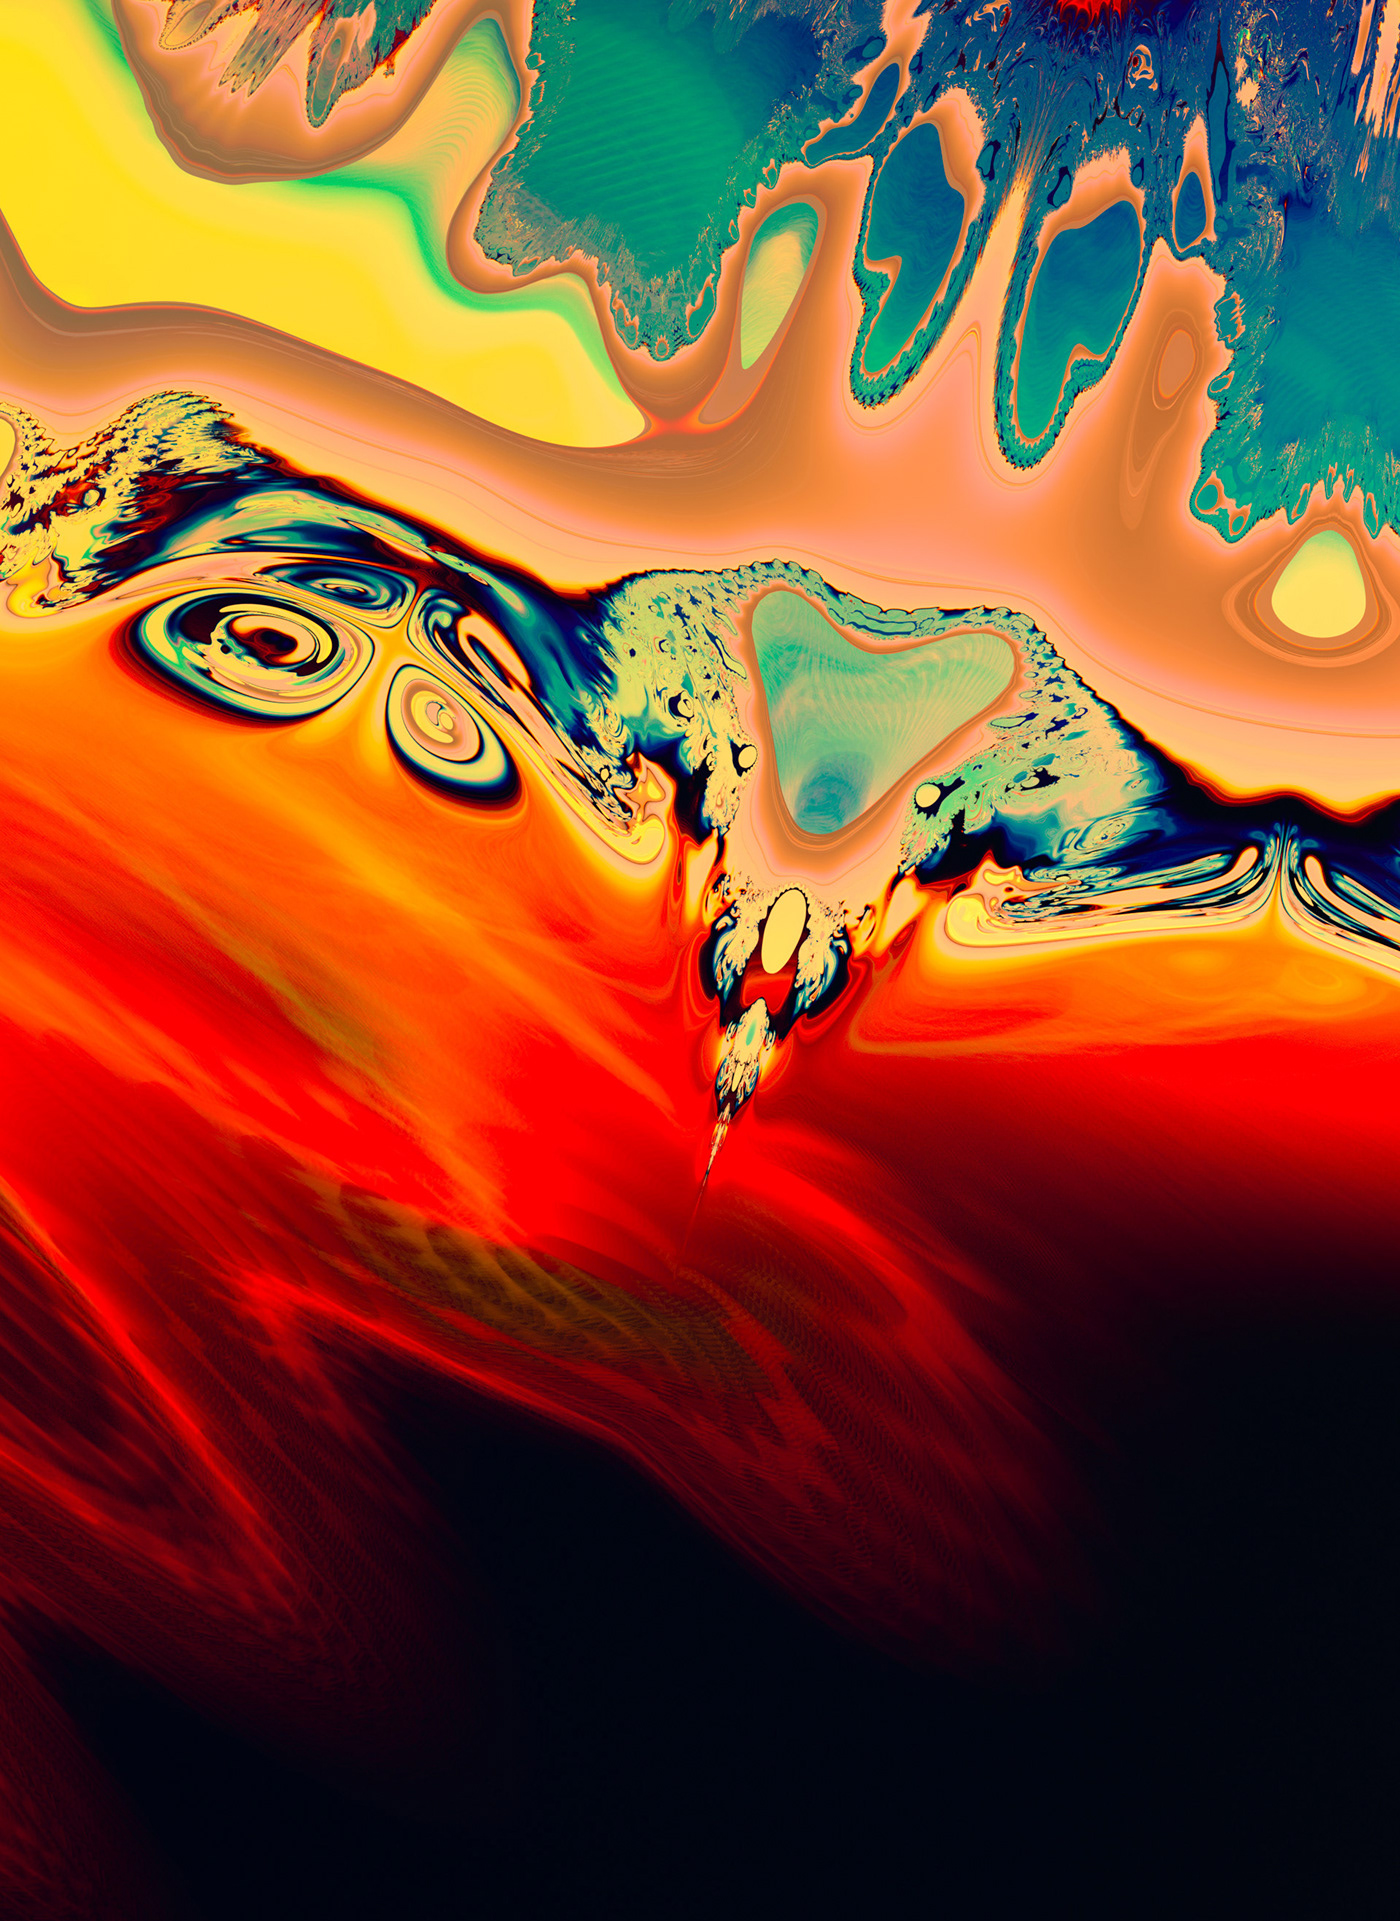 dispersion fractal cinema 4d vectron abstract Liquid pigment c4d motion design CGI